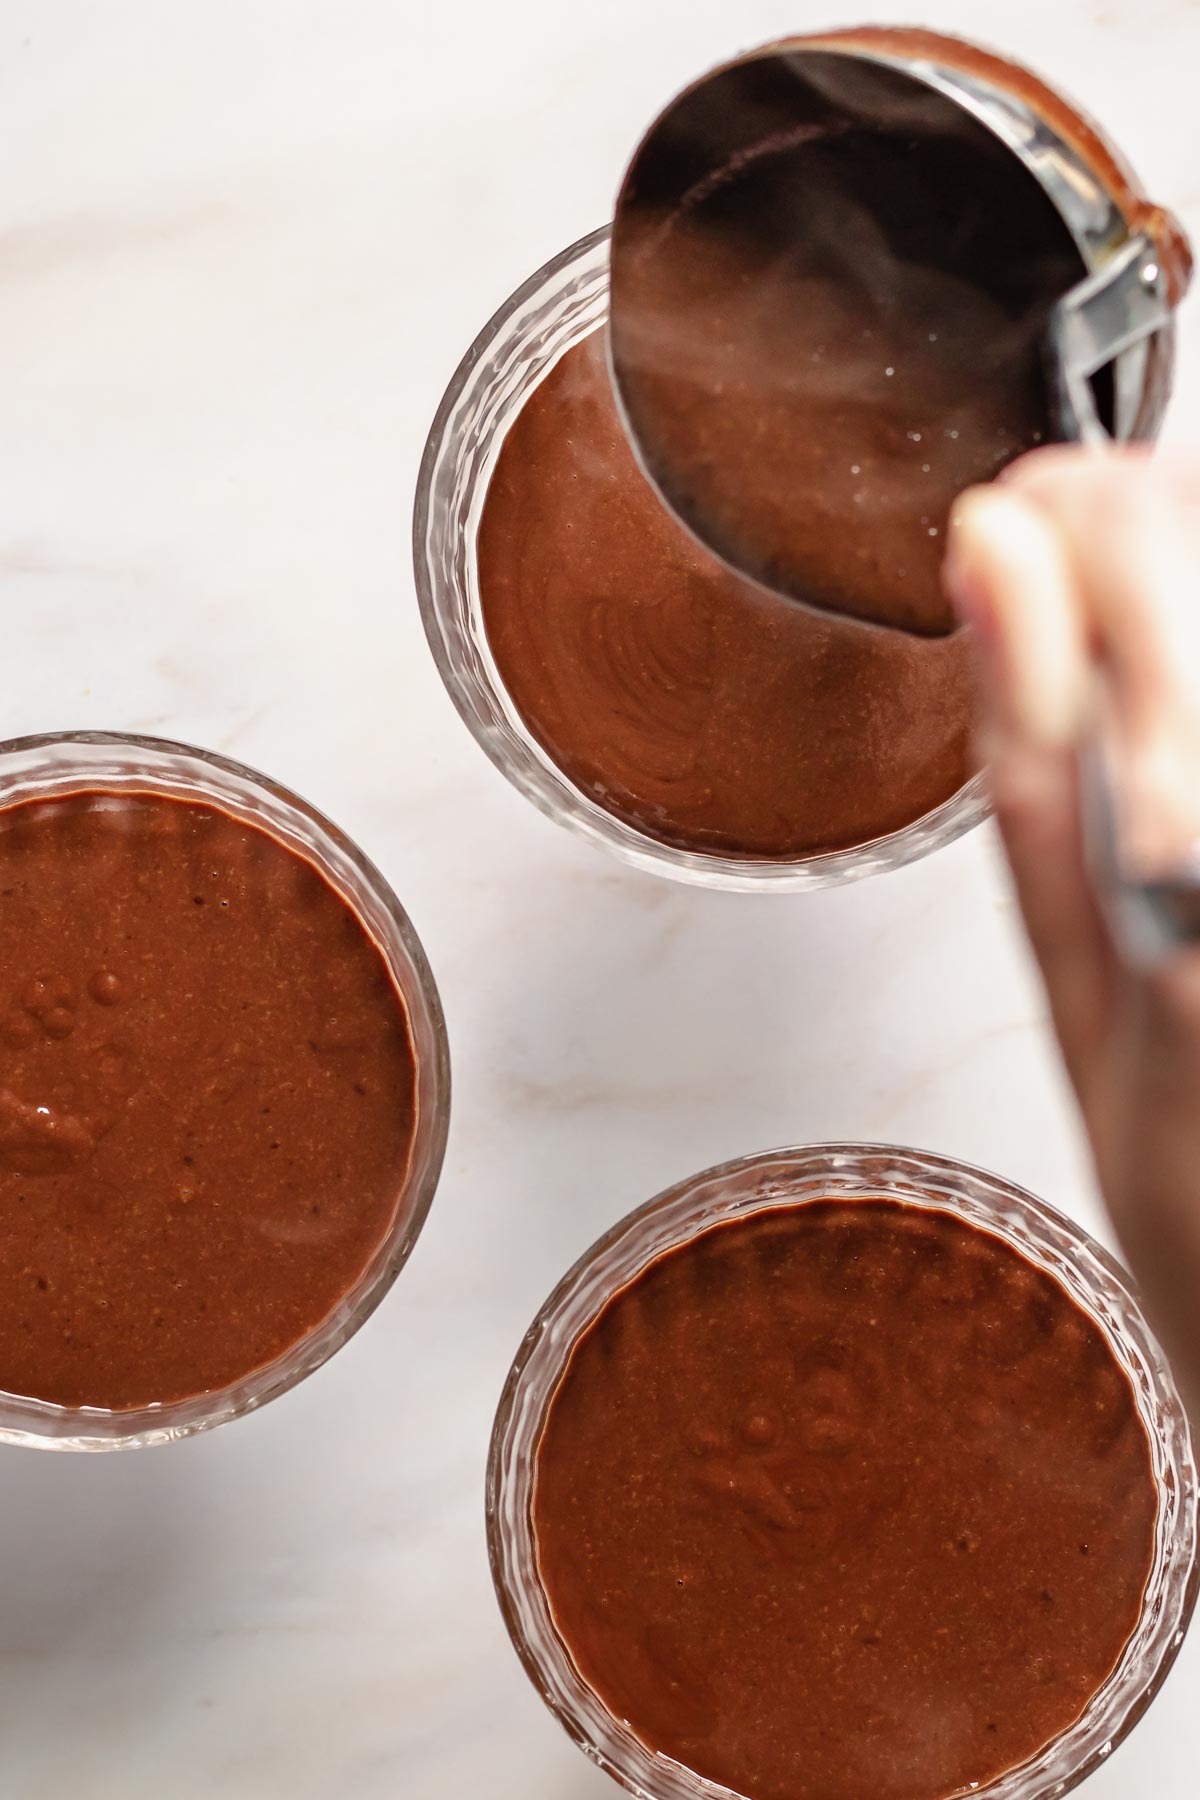 A ladle pours chocolate mixture into coupe glasses.